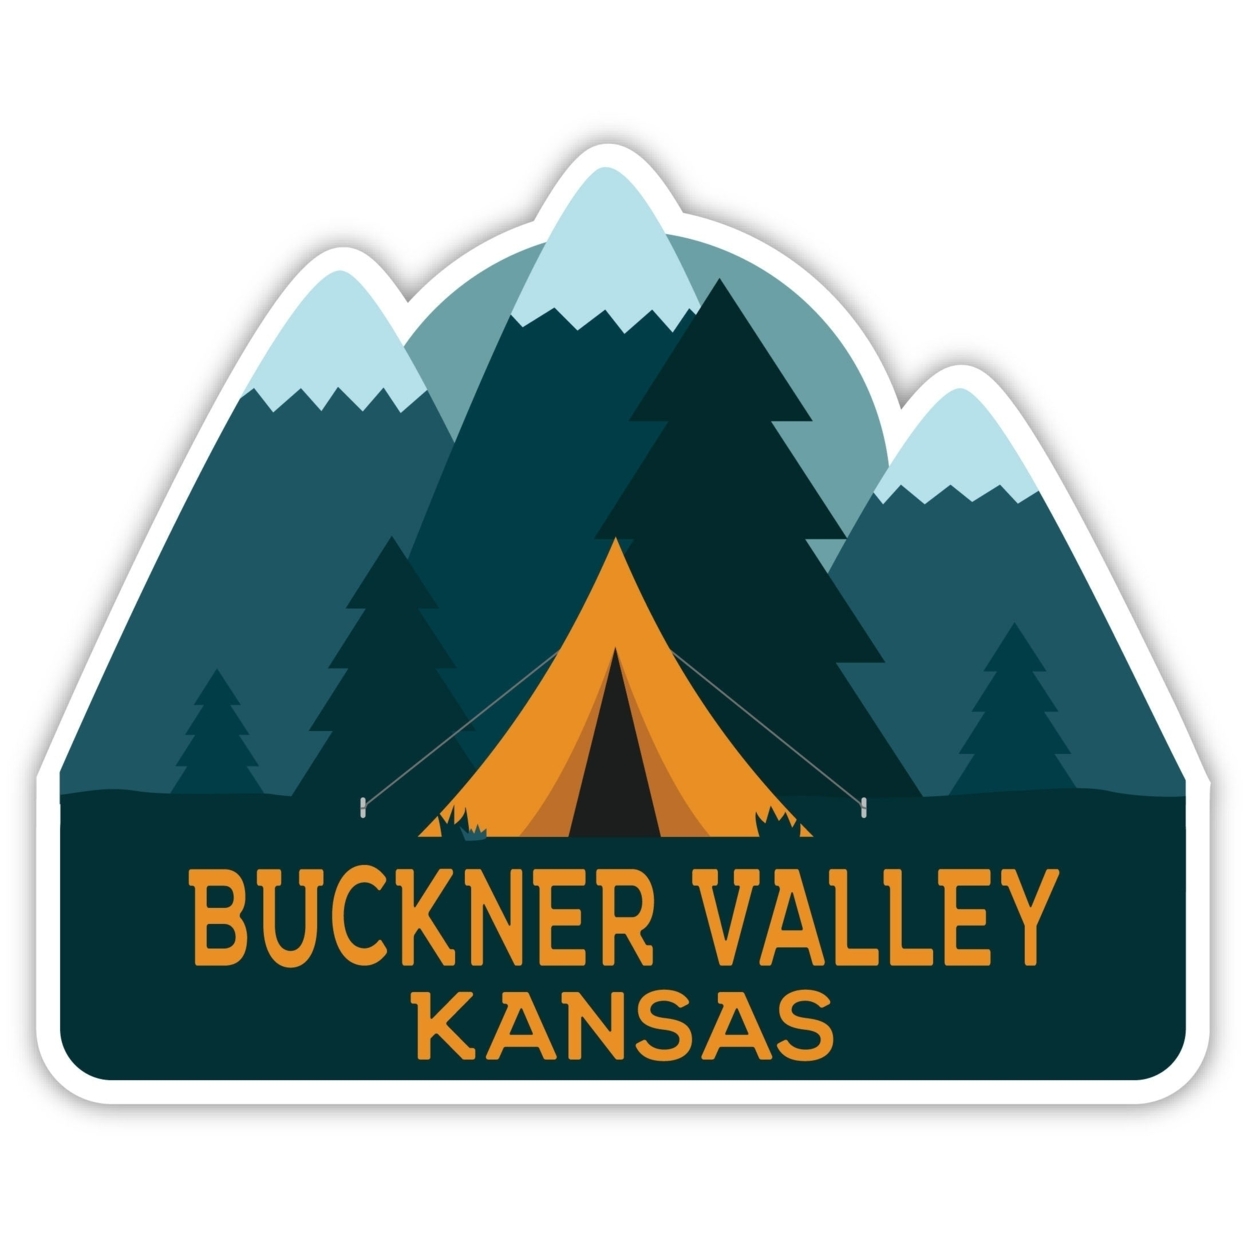 Buckner Valley Kansas Souvenir Decorative Stickers (Choose Theme And Size) - Single Unit, 8-Inch, Tent